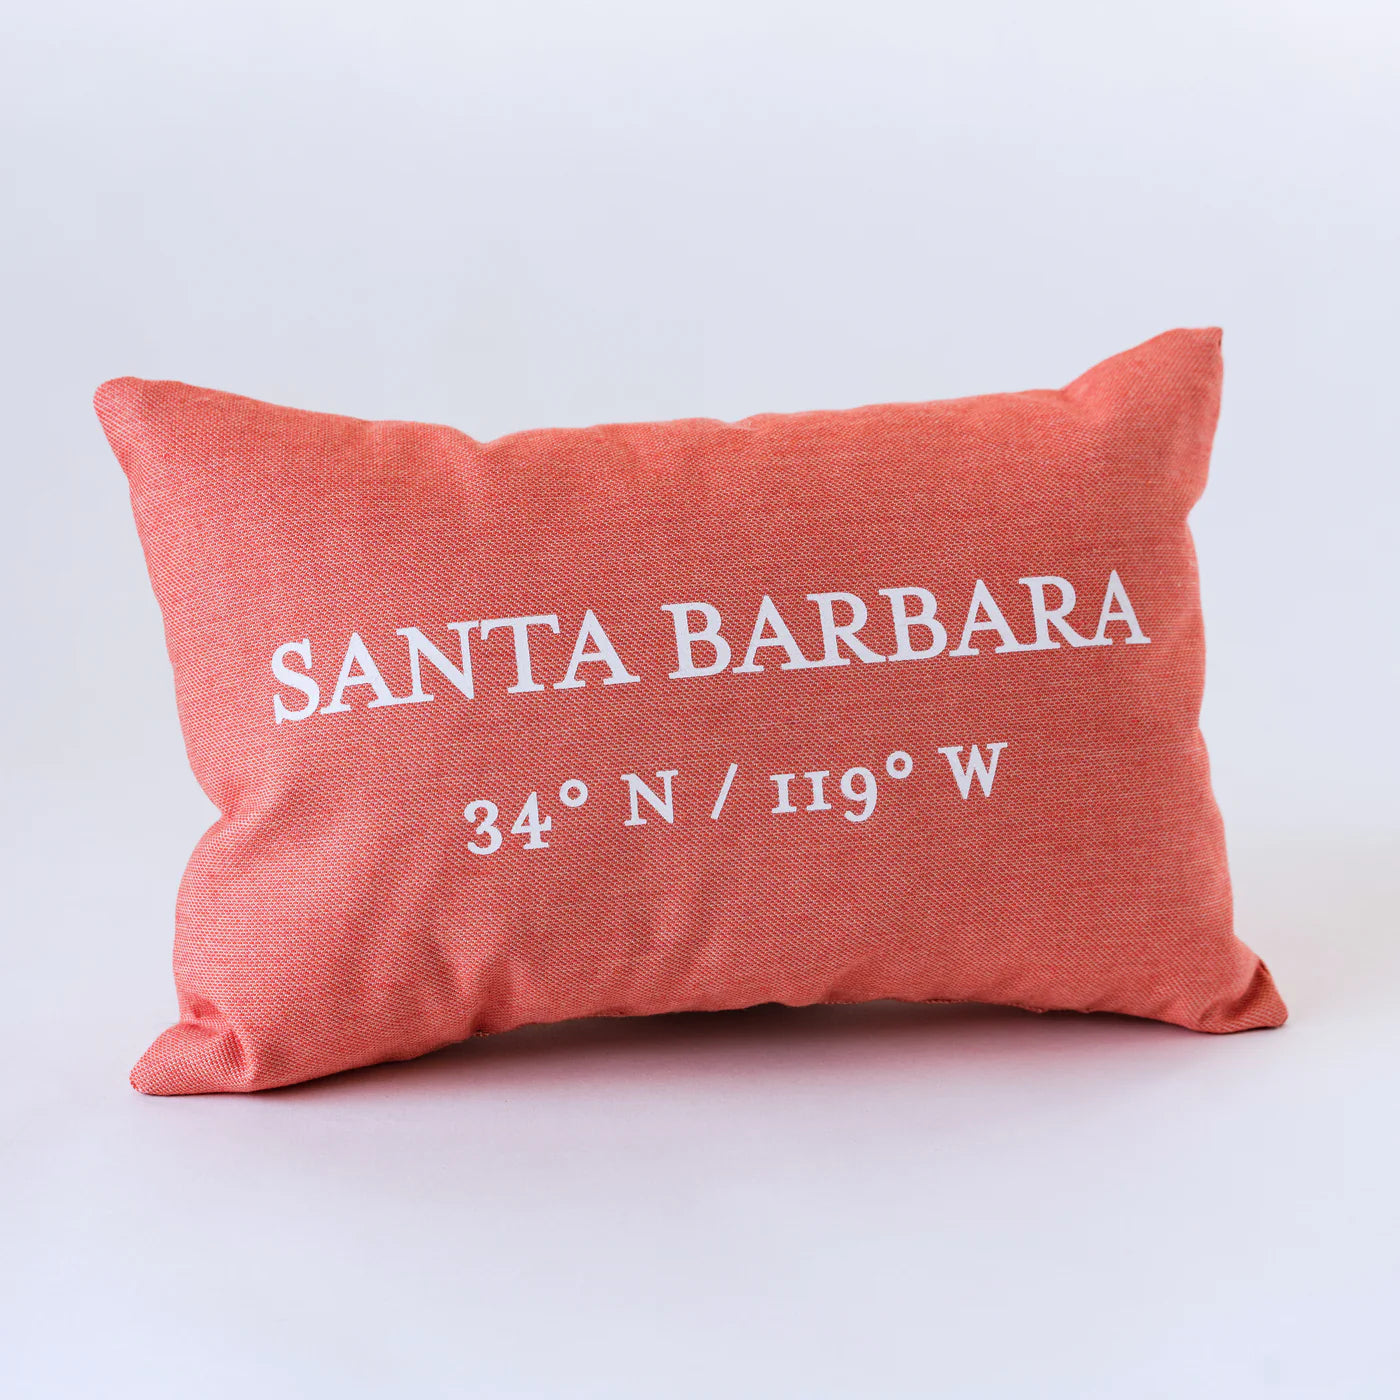 Santa Barbara coordinates pillow